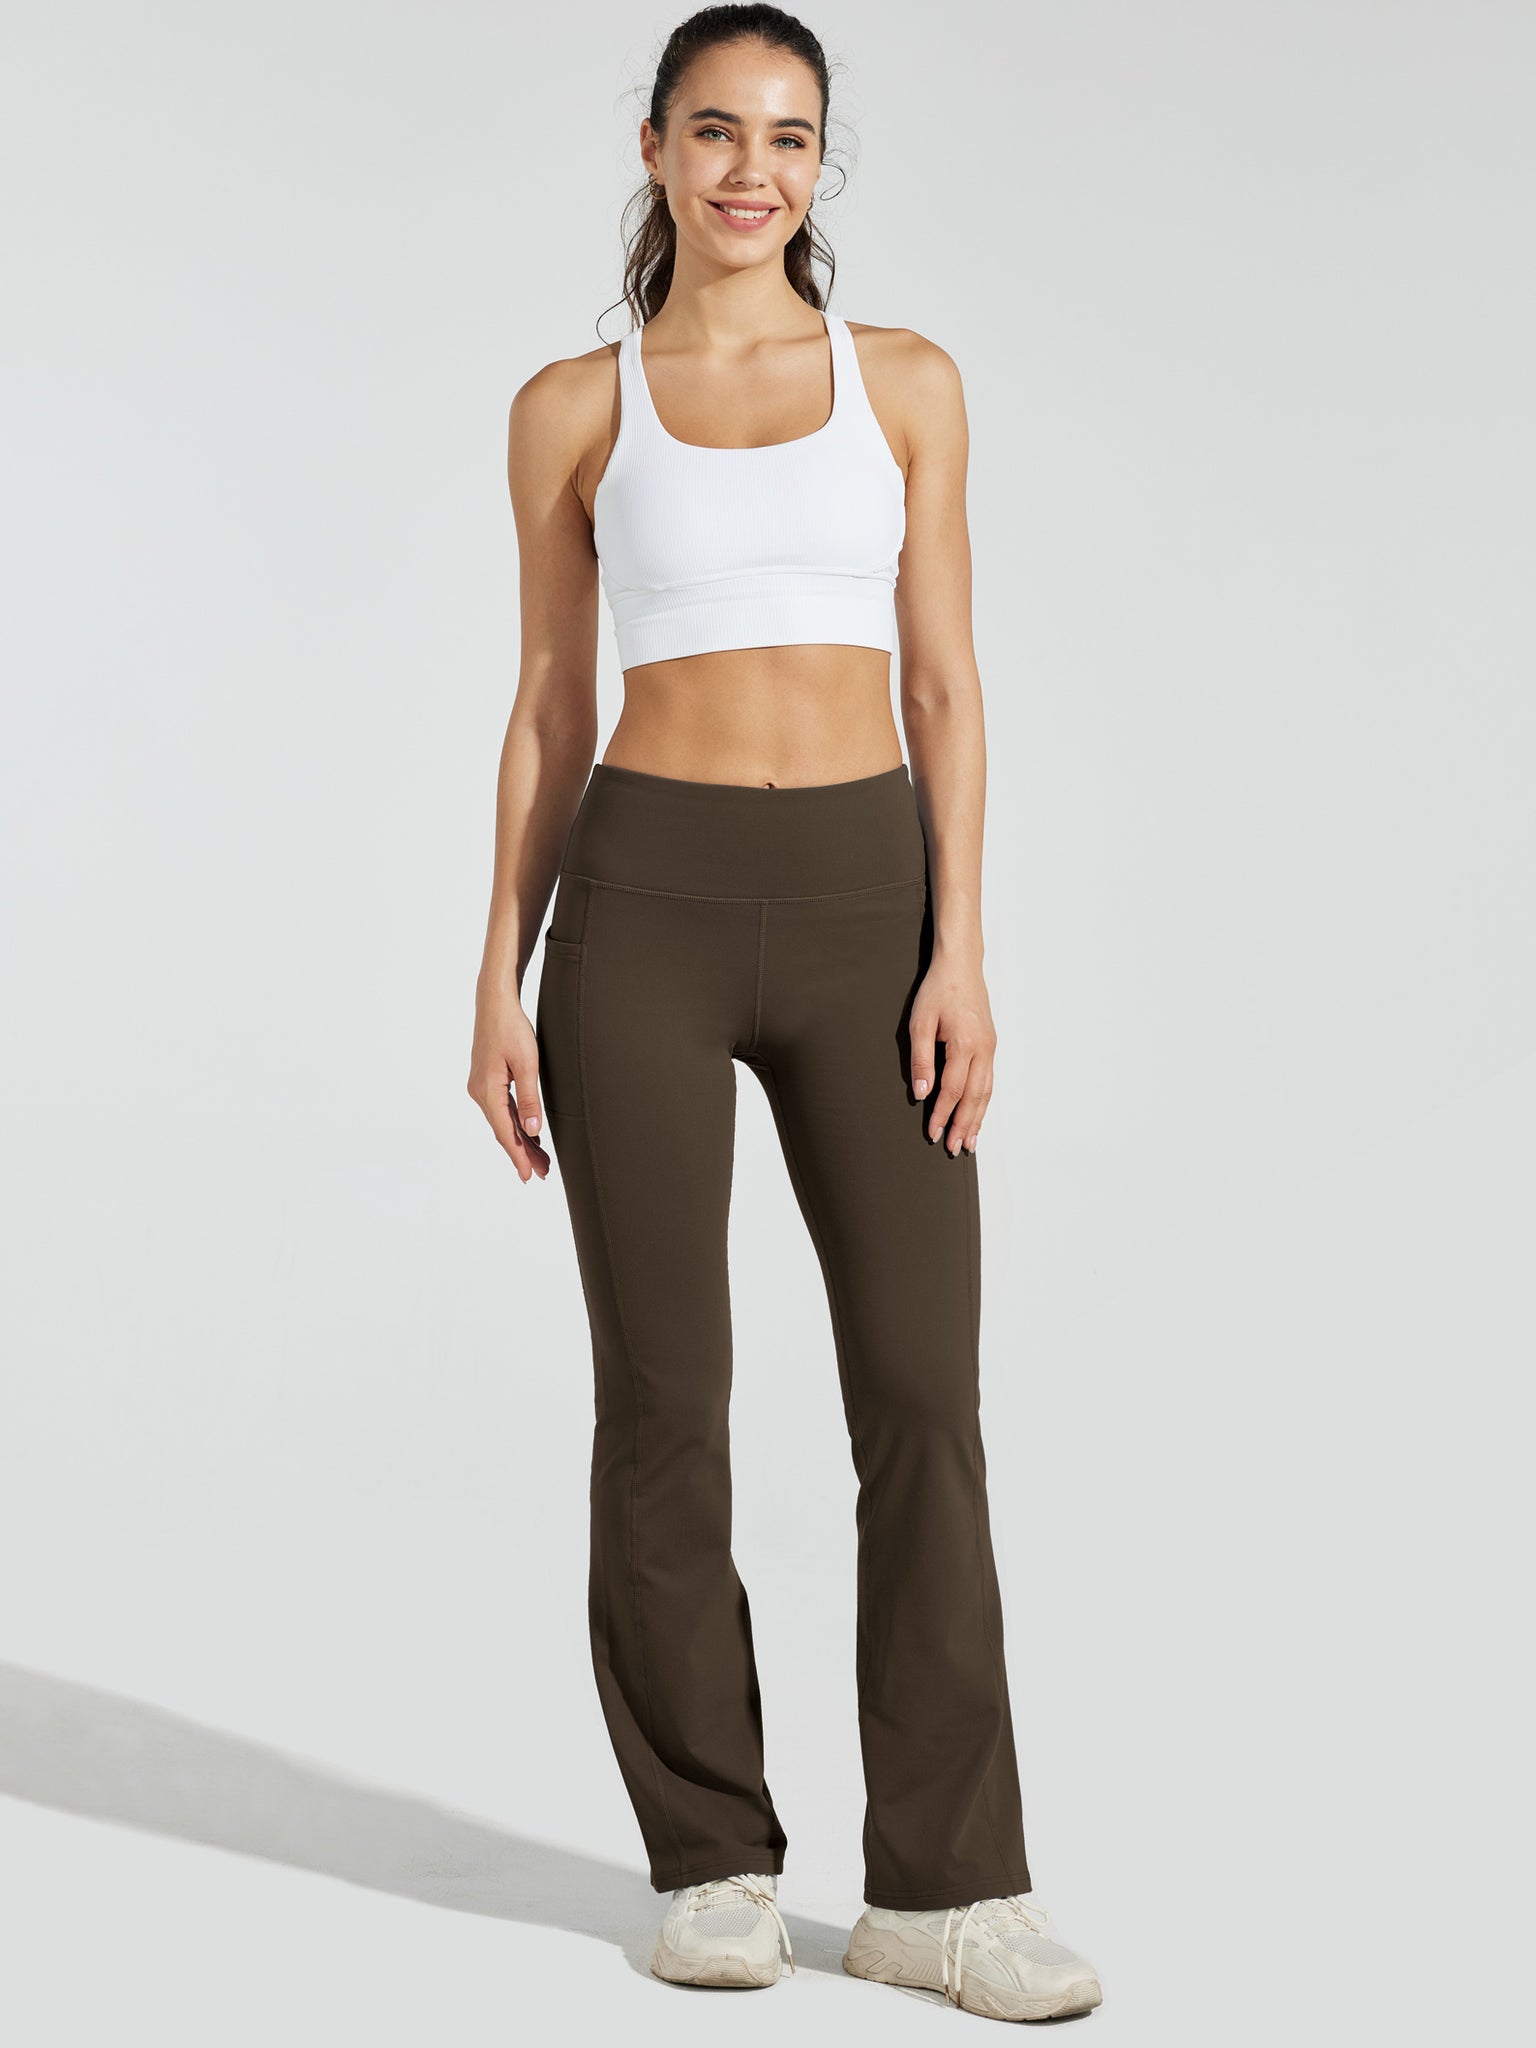 Women's Fleece Lined Bootcut Yoga Pants_Brown_model3